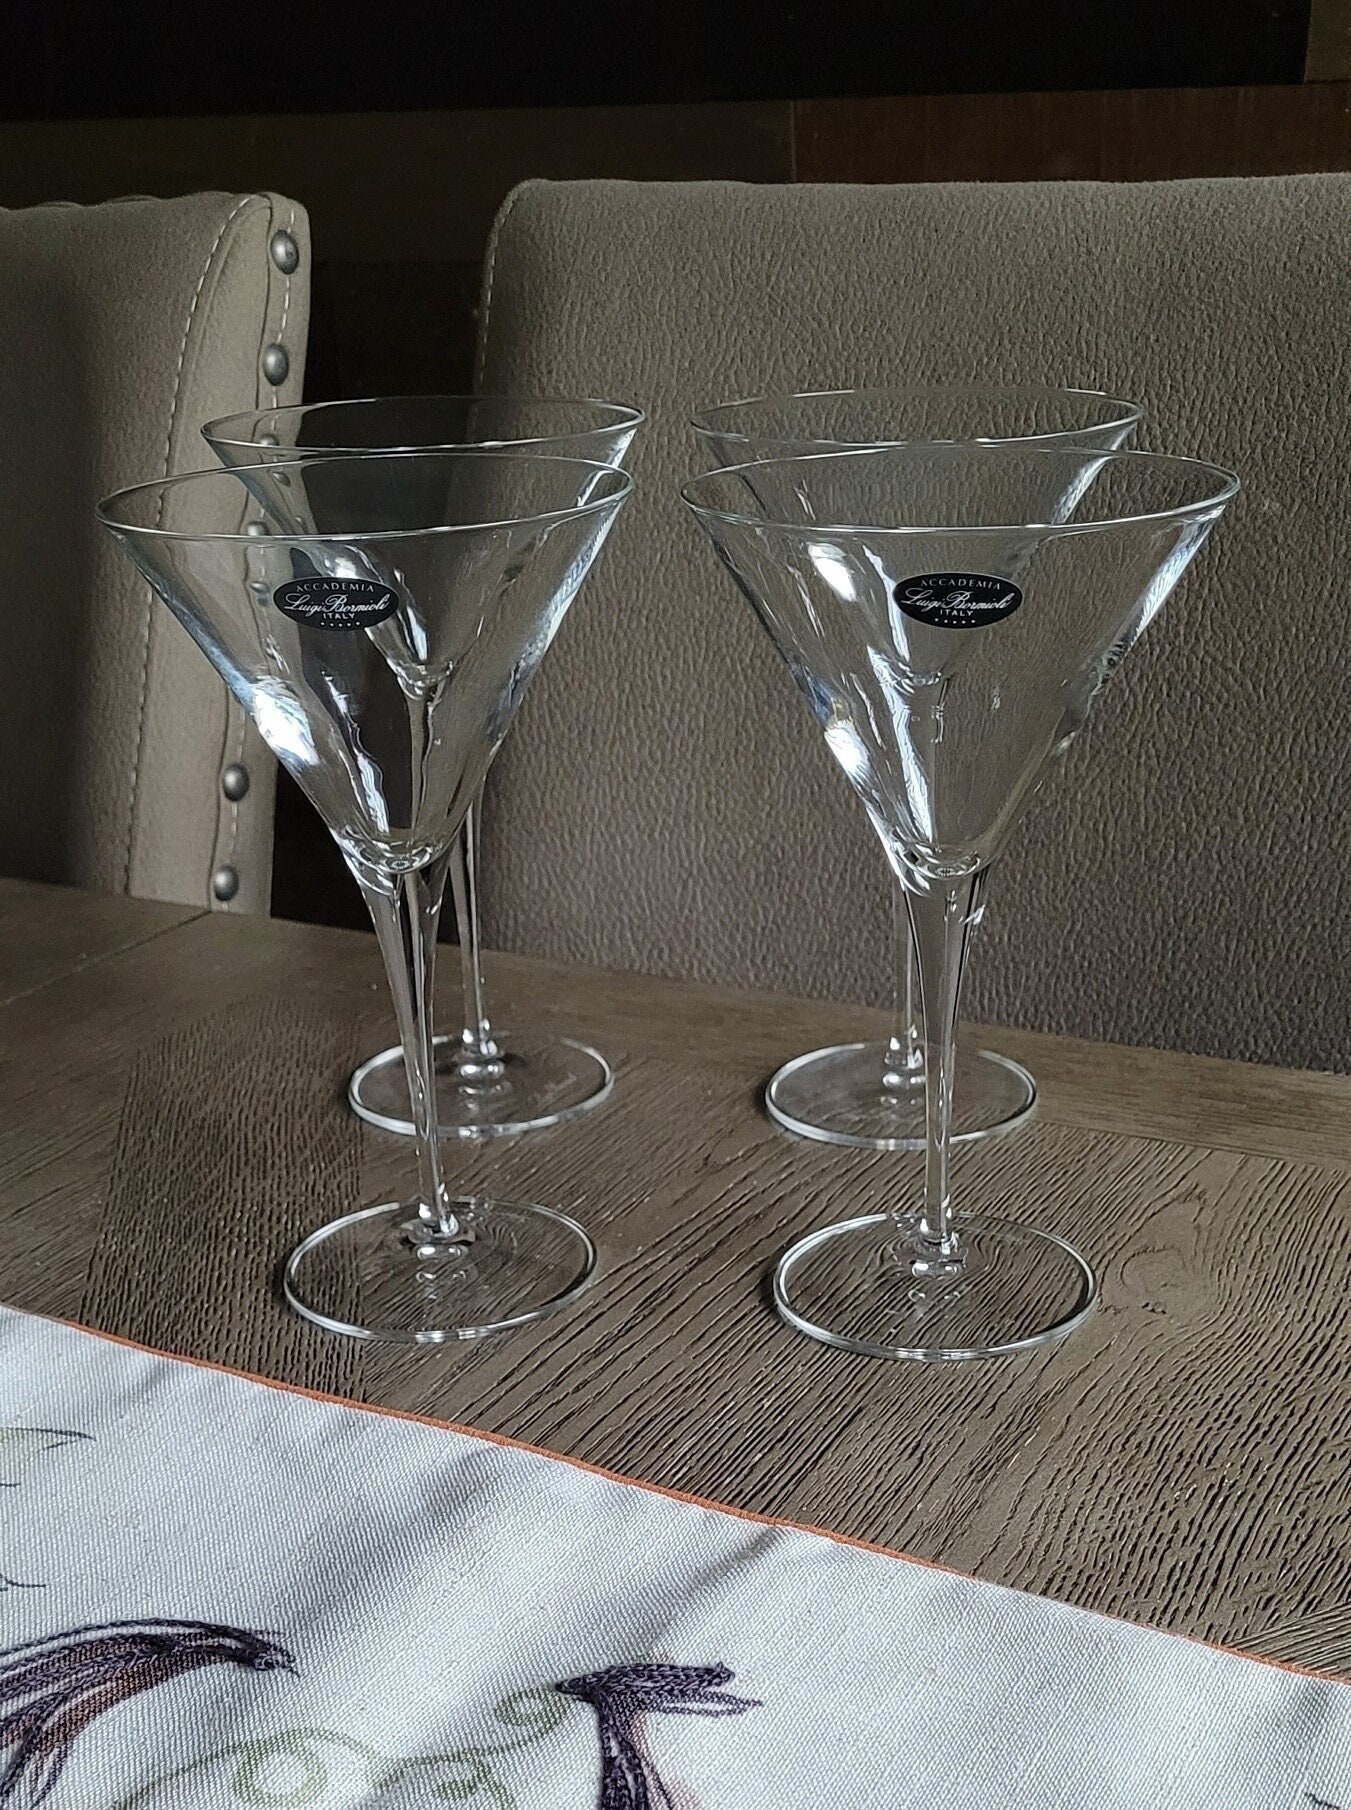 Luigi Bormioli Crescendo 10 Ounce Martini Glasses Set Of 4, Crystal SON-hyx  Glass, Made In Italy.